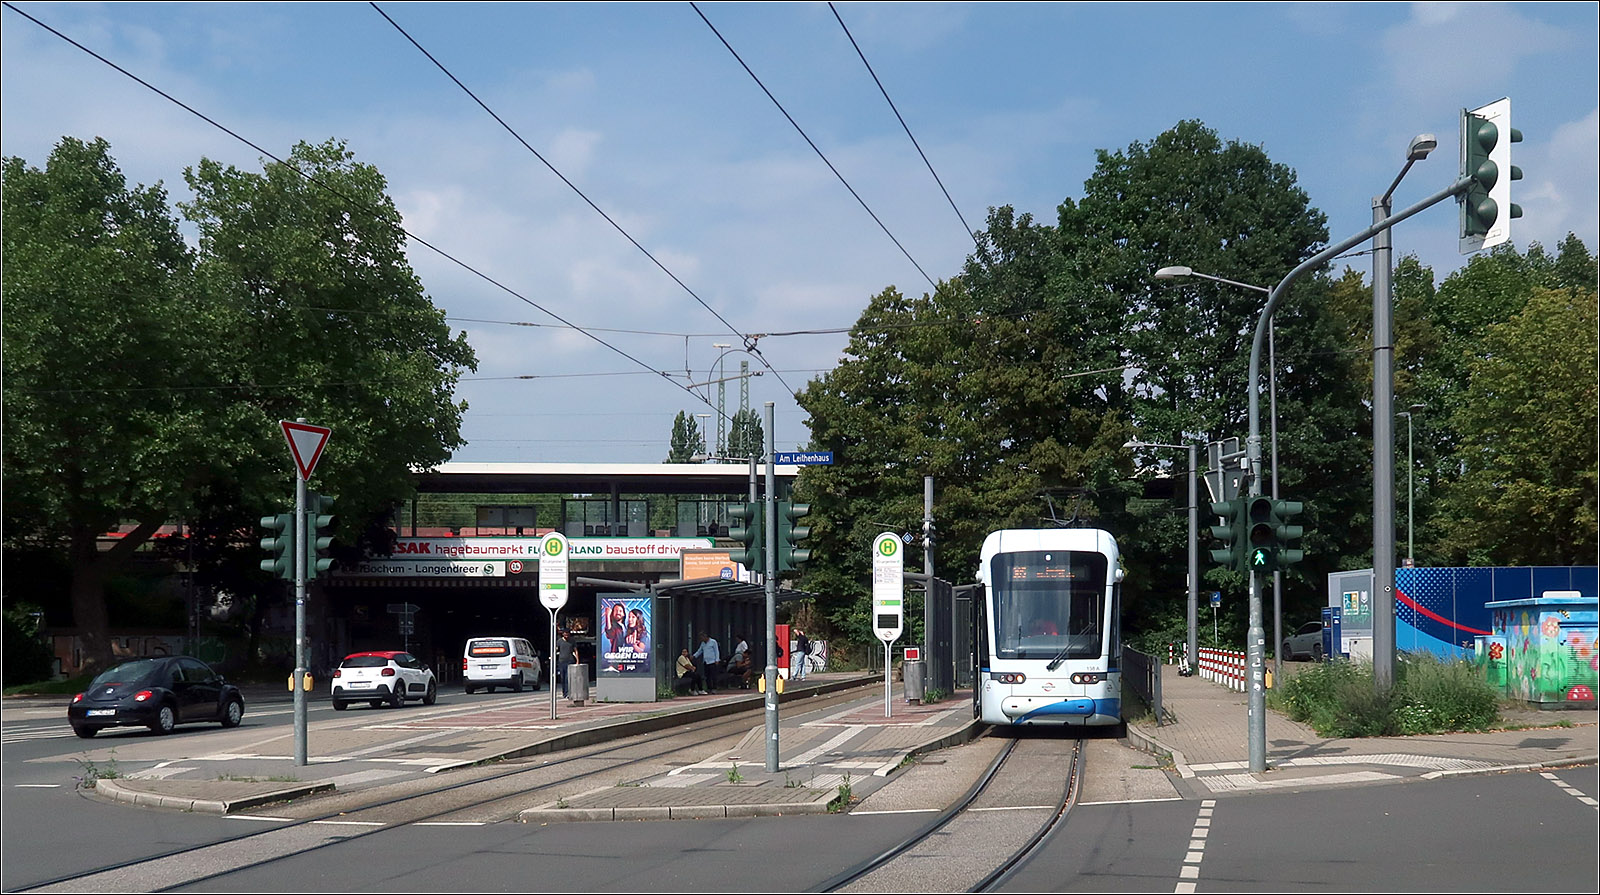 Eine Straßenbahn-Neubaustrecke in Bochum-Langendreer. 

Stadler Variobahn 138 auf der Linie 305 an der Endhaltestelle Langendreer S.

22.08.2023 (M)